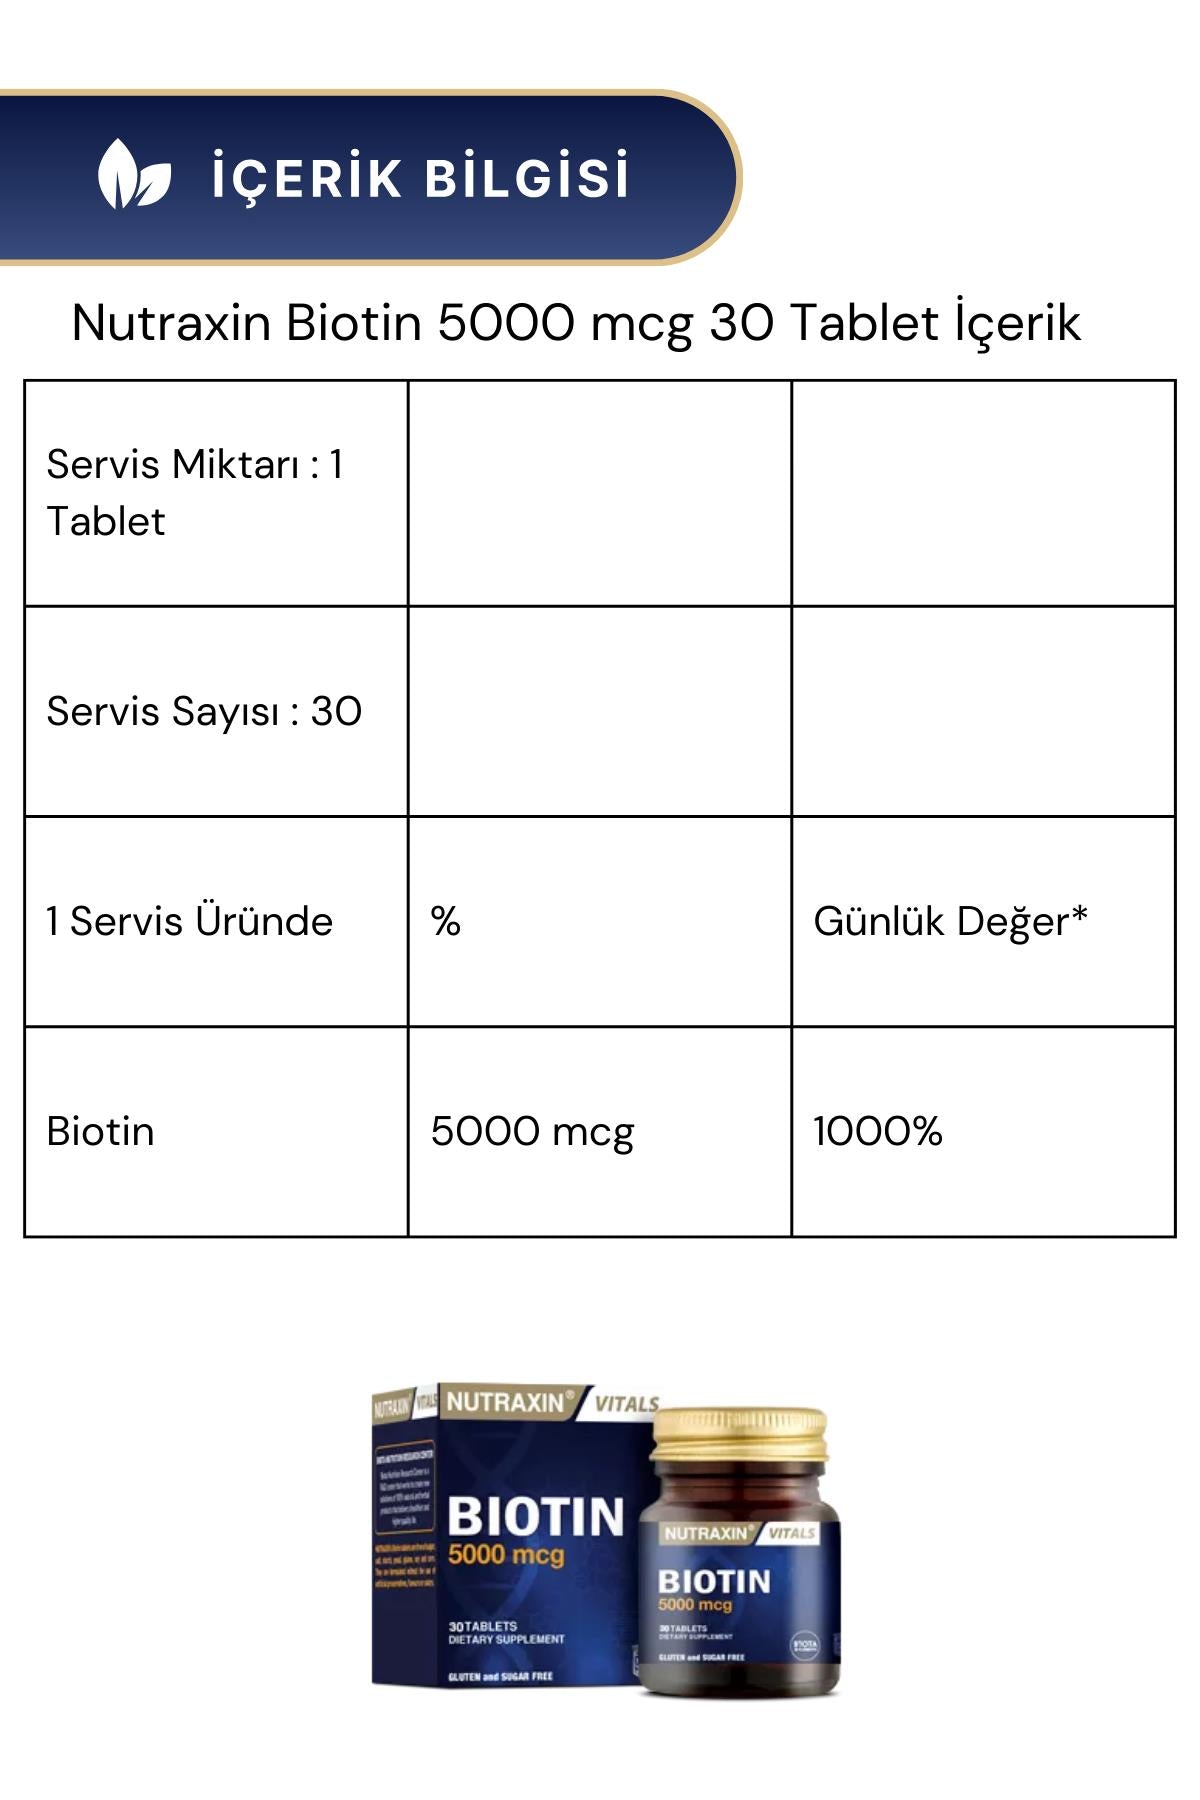 Nutraxin Vitamin Max C-D-Zinc 60 Tablet & Biotin 5000 mcg 30 Tablet